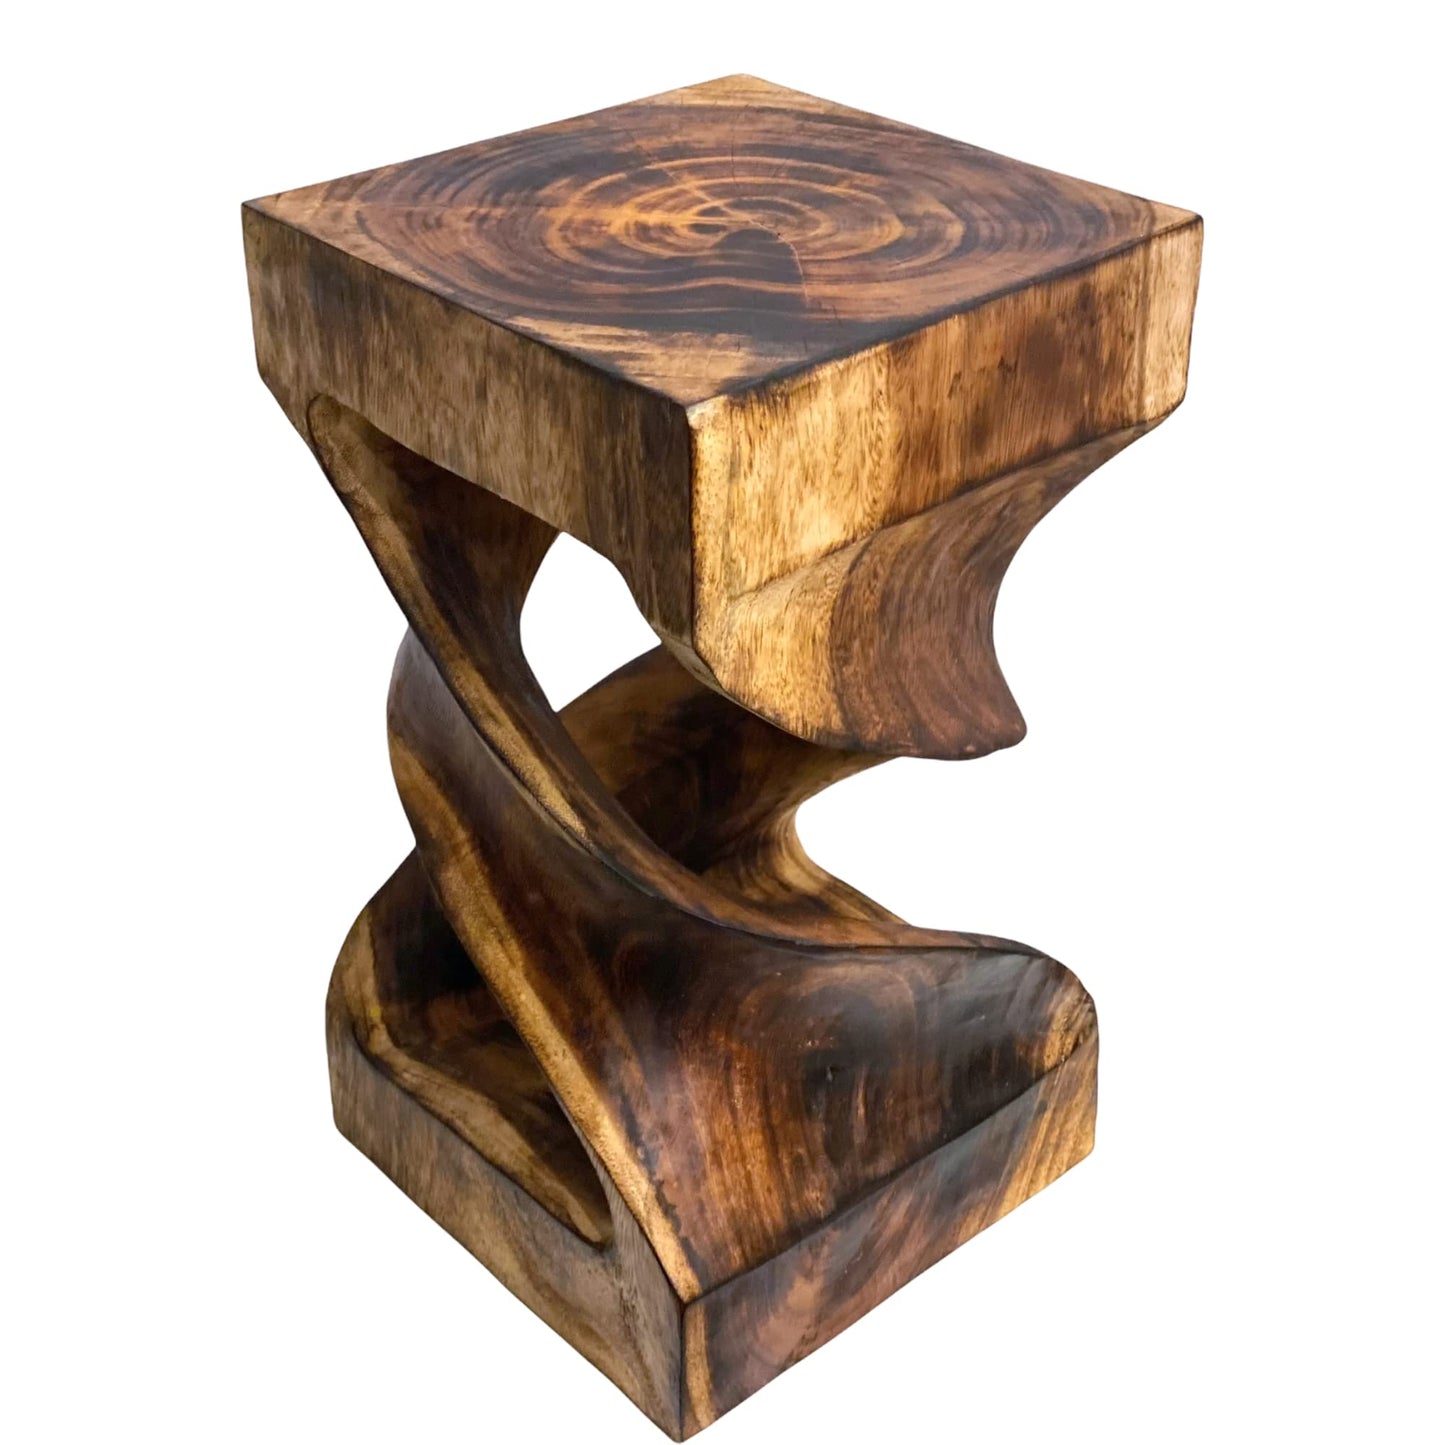 Holz Beistelltisch - Holzhocker Couchtisch - Flambierter Handgefertigt - Gedreht aus massivem Suarholz - 50x28x28 cm